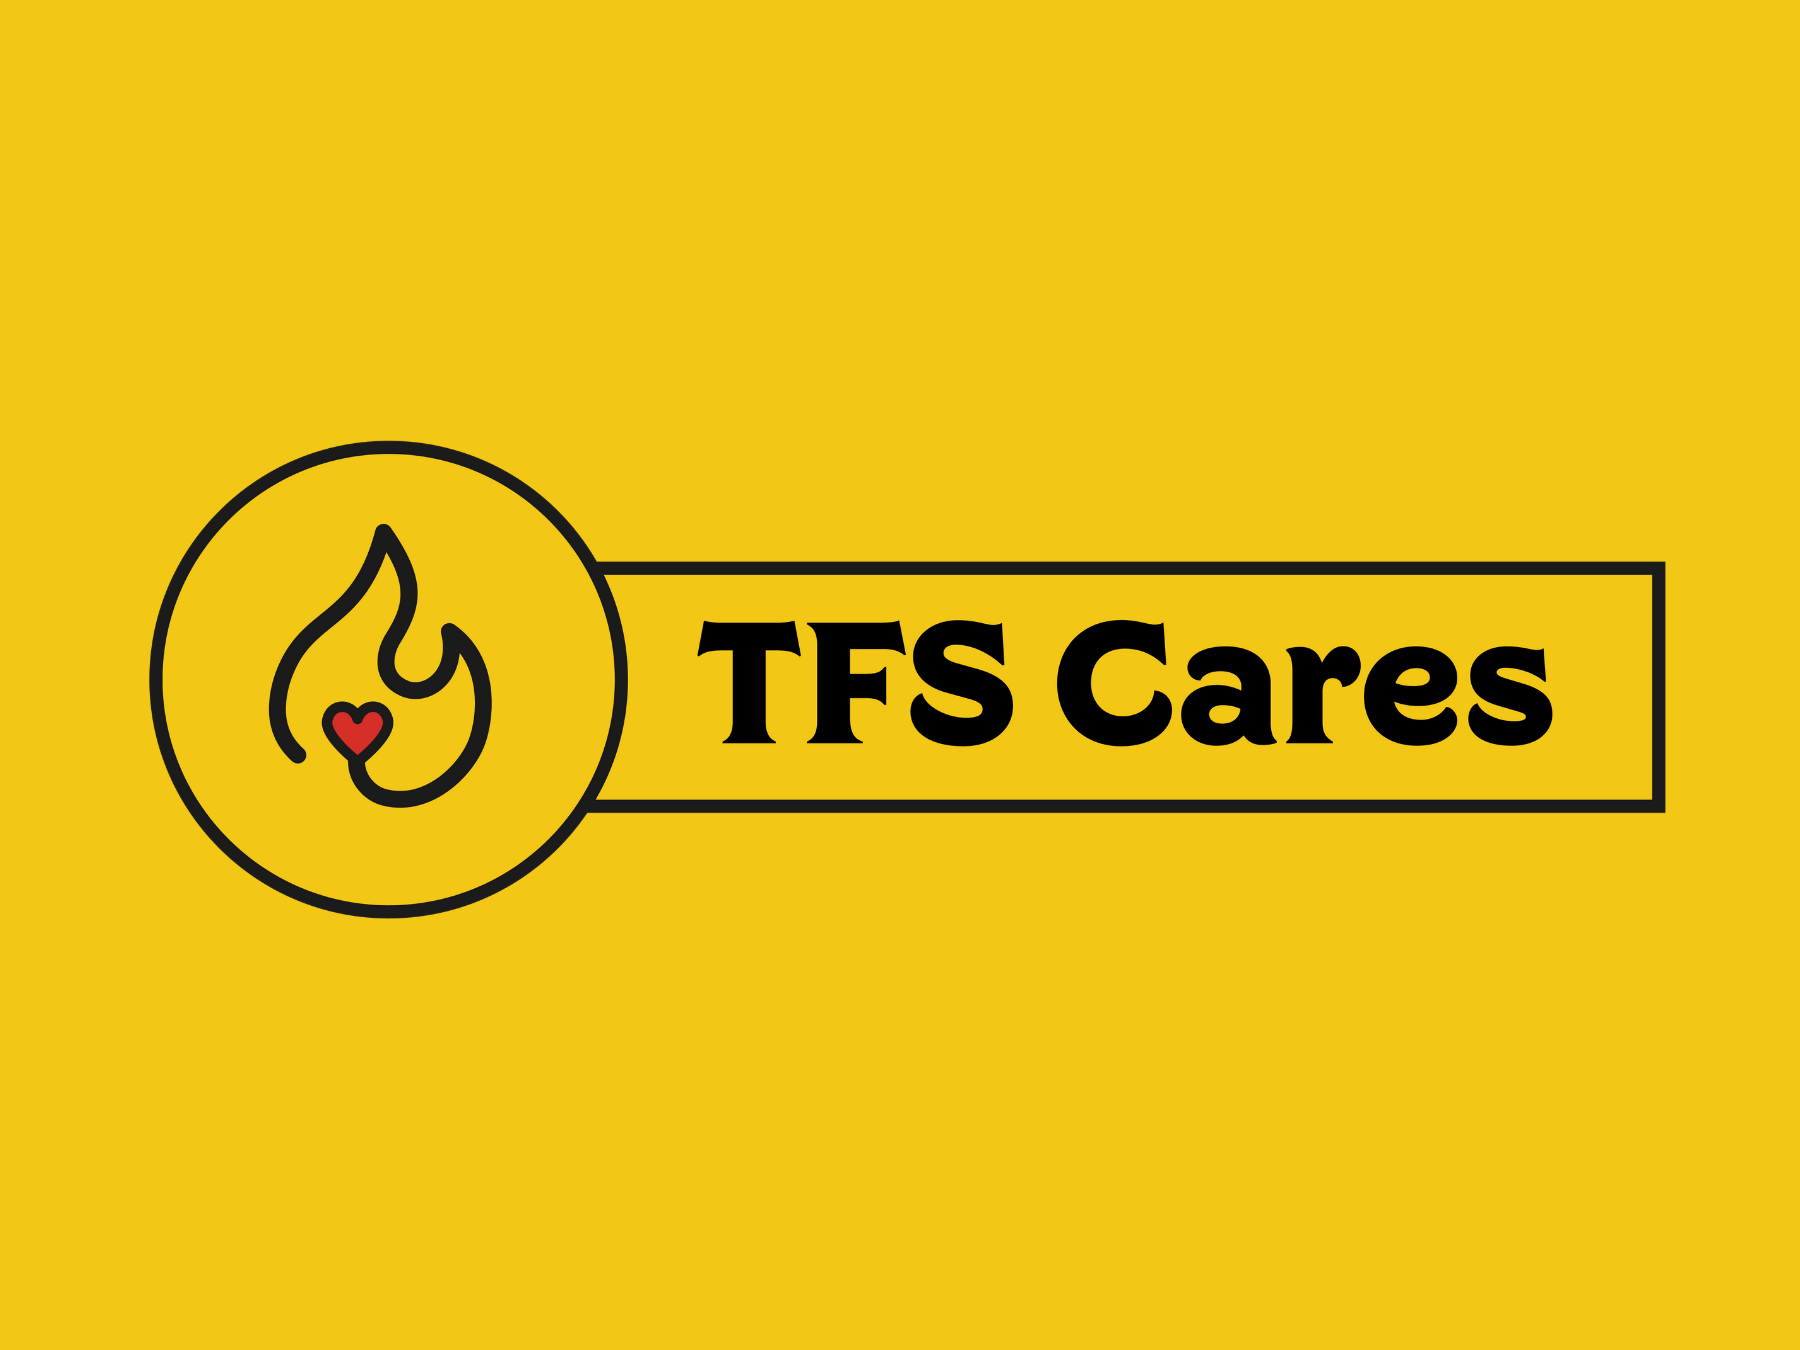 TFS cares